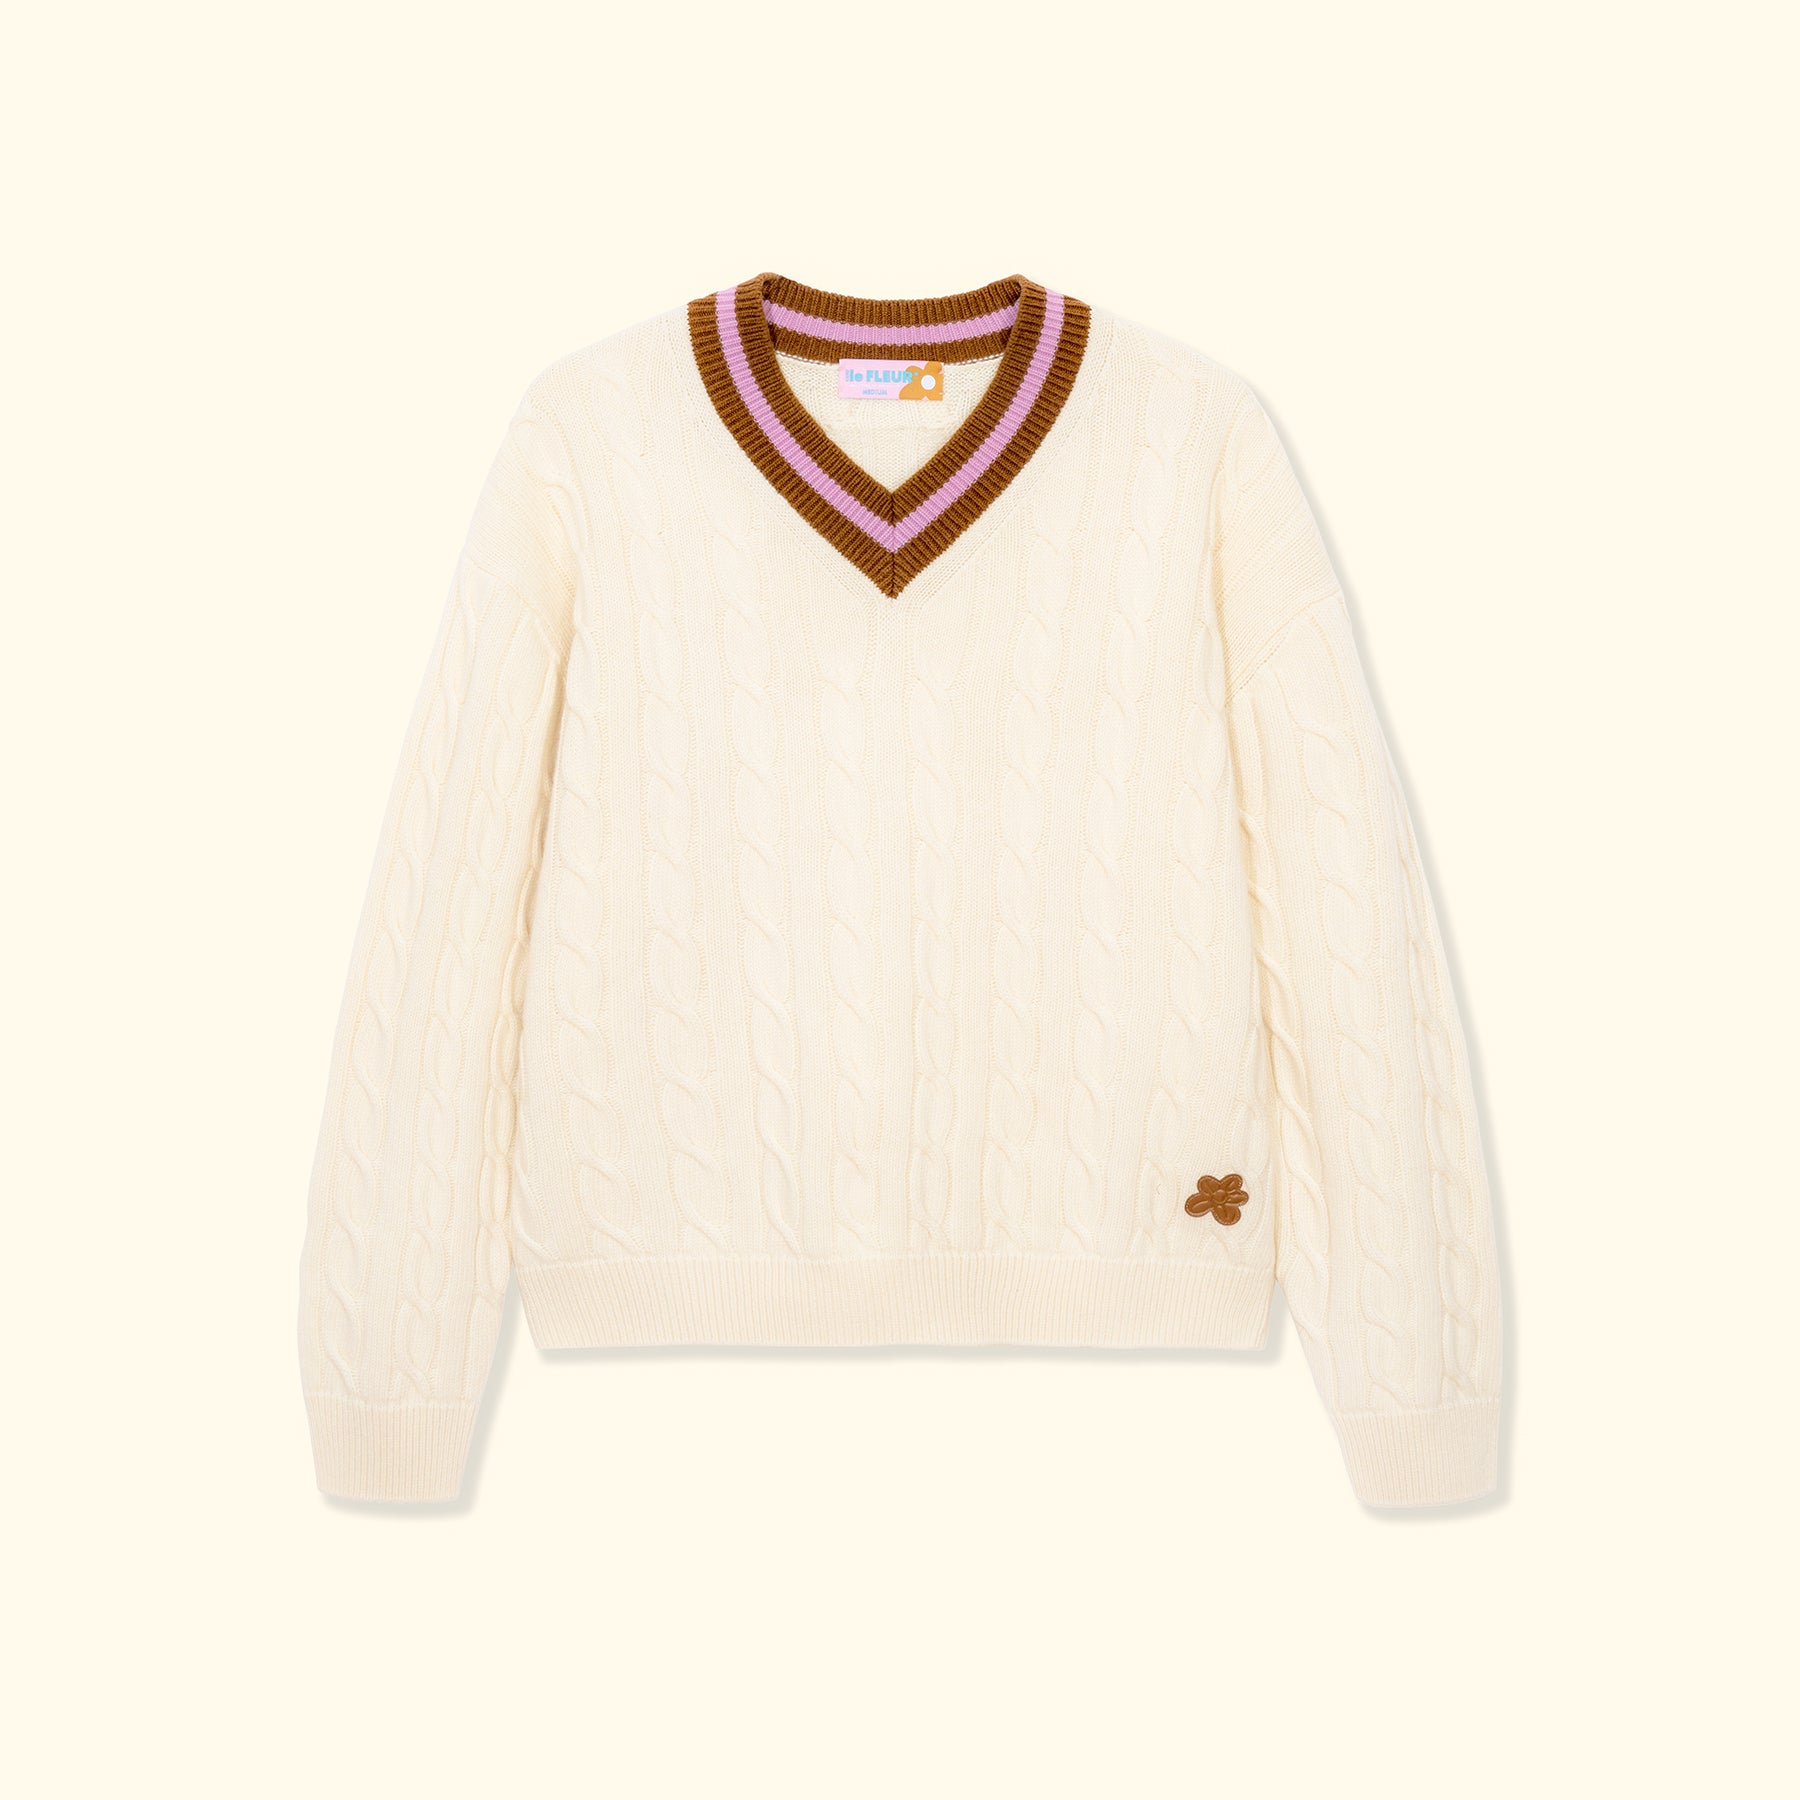 Wimbledon Sweater